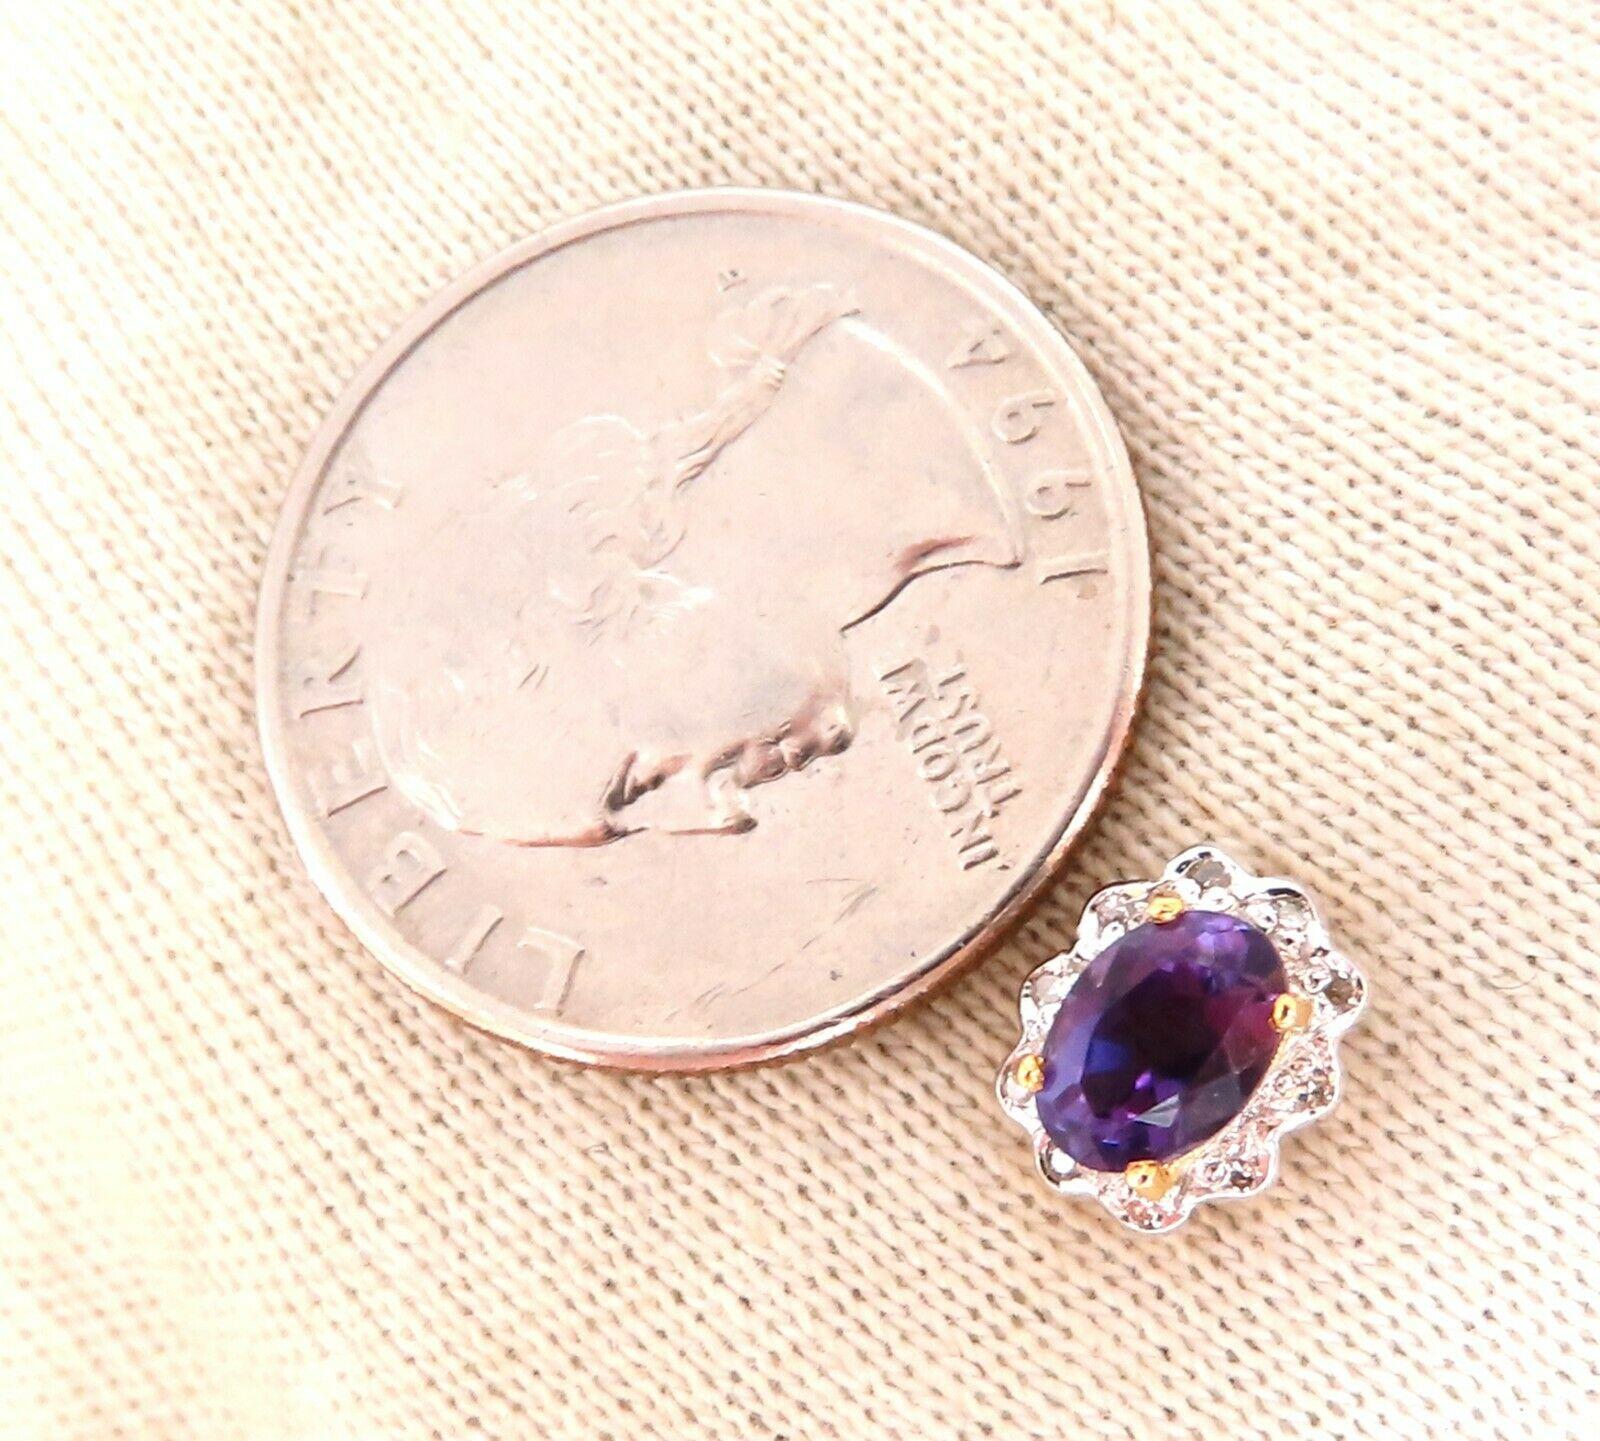 Natural Vivid Purple Amethyst Clip Earrings.

2ct natural vivid purple amethyst.

7x5 mm each

.20ct natural diamonds

H-color Si-1 clarity

14 karat yellow gold 2.2 grams

Overall earrings: 8 x 10mm

Depth: 6mm